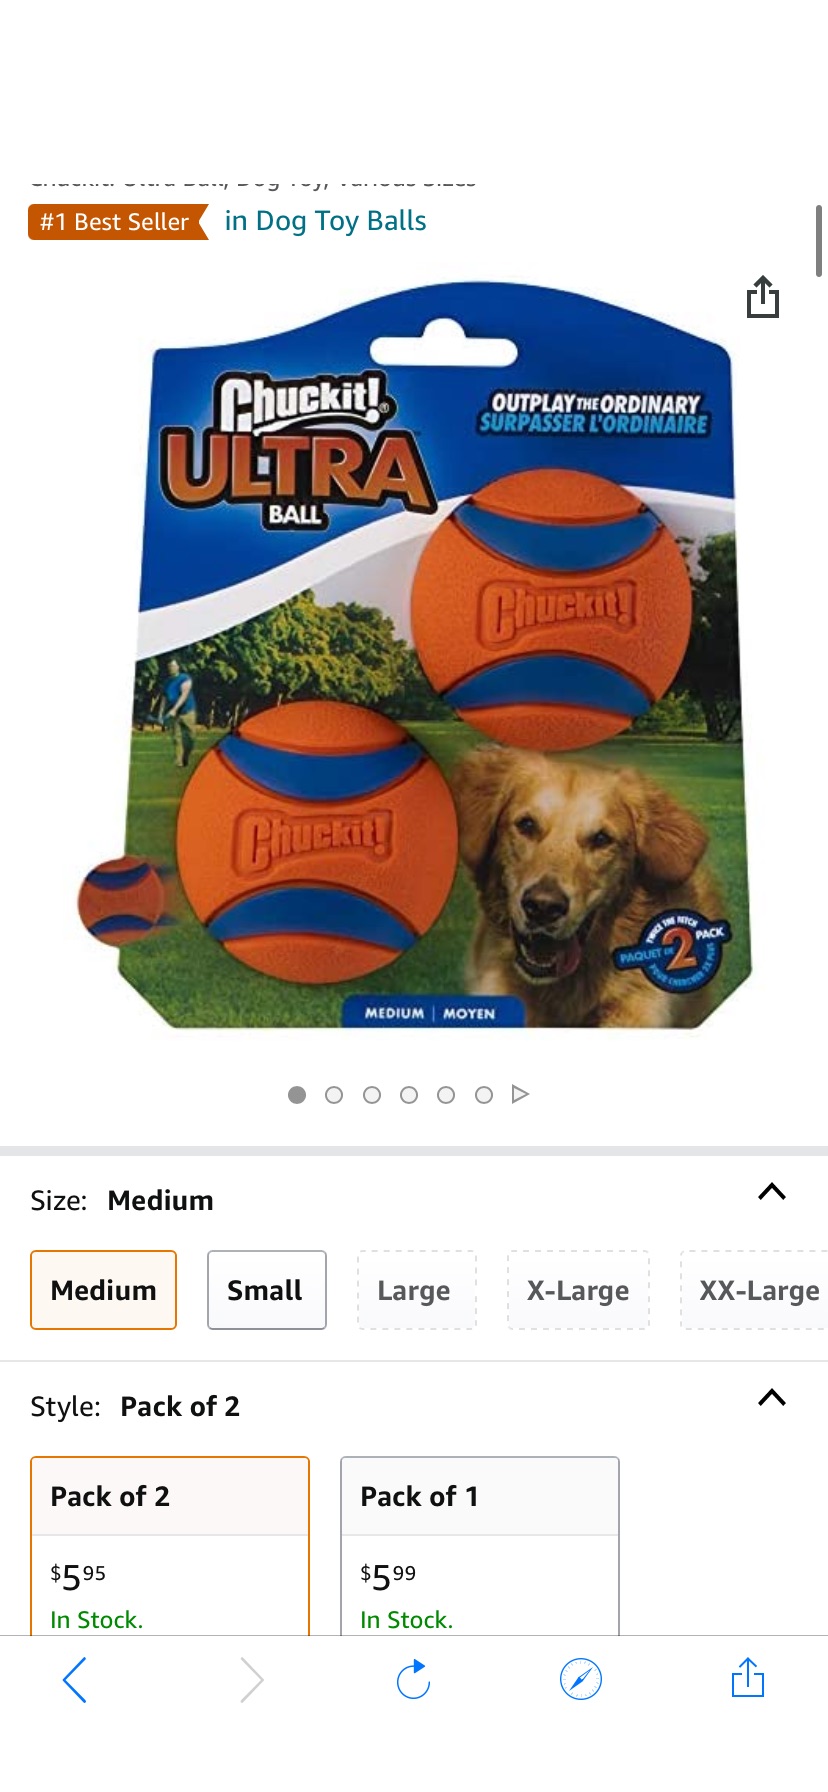 Pet Supplies : Pet Toy Balls 狗狗球玩具2个: ChuckIt! Ultra Ball, Medium (2.5 Inch) 2 Pack : Amazon.com